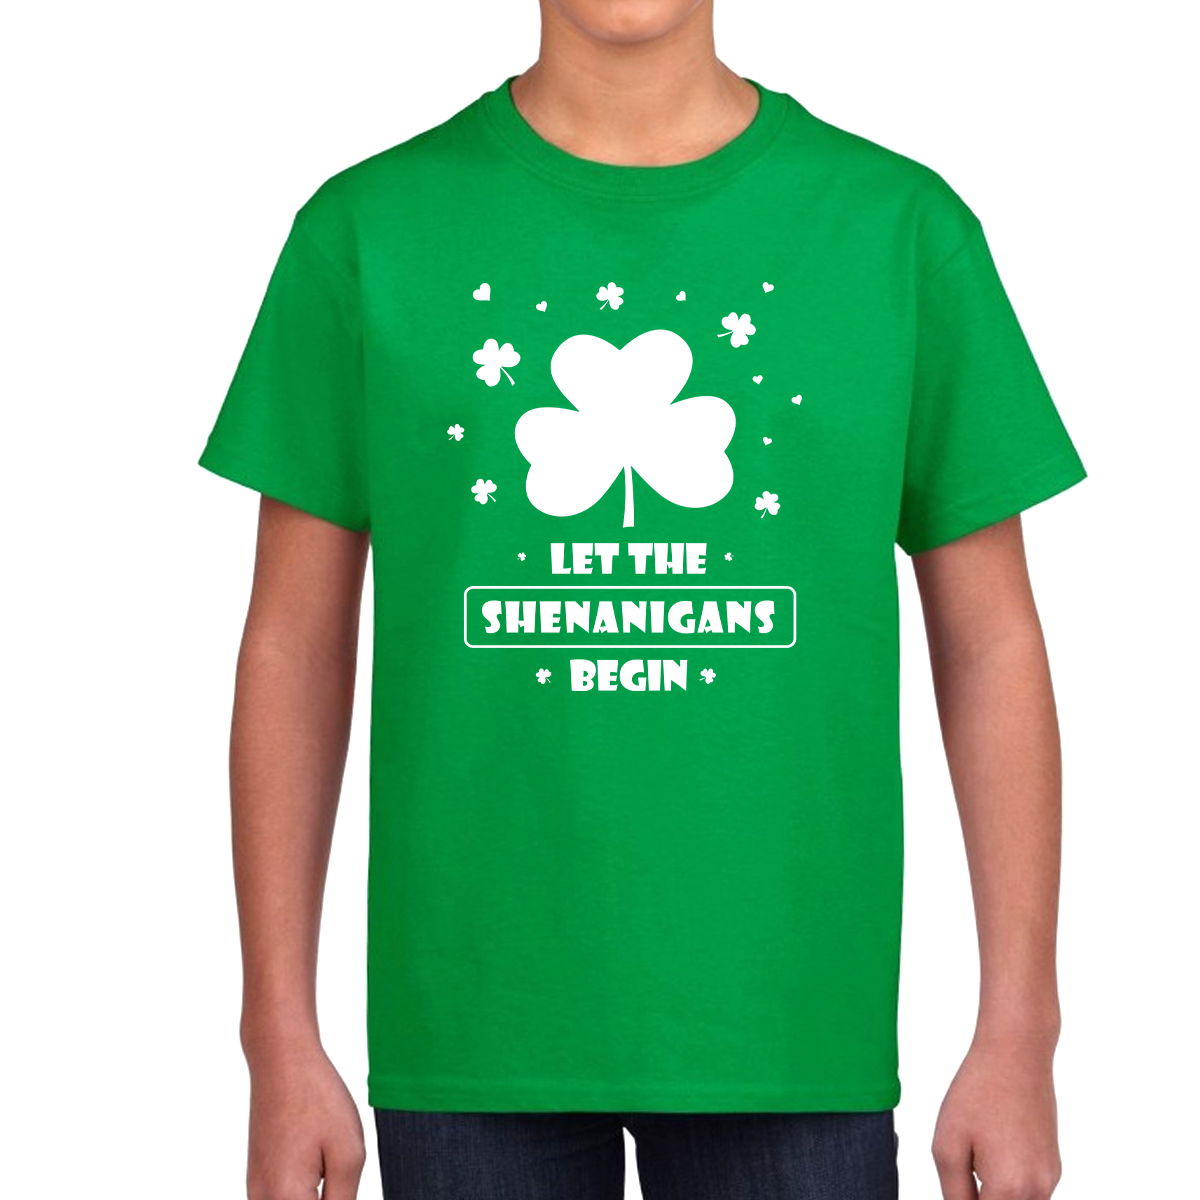 Fire Fit Designs St Patricks Day Shirt Boys Irish Lucky Clover Shamrock St Patricks Day Shirt for Boys Shenanigans Shirt